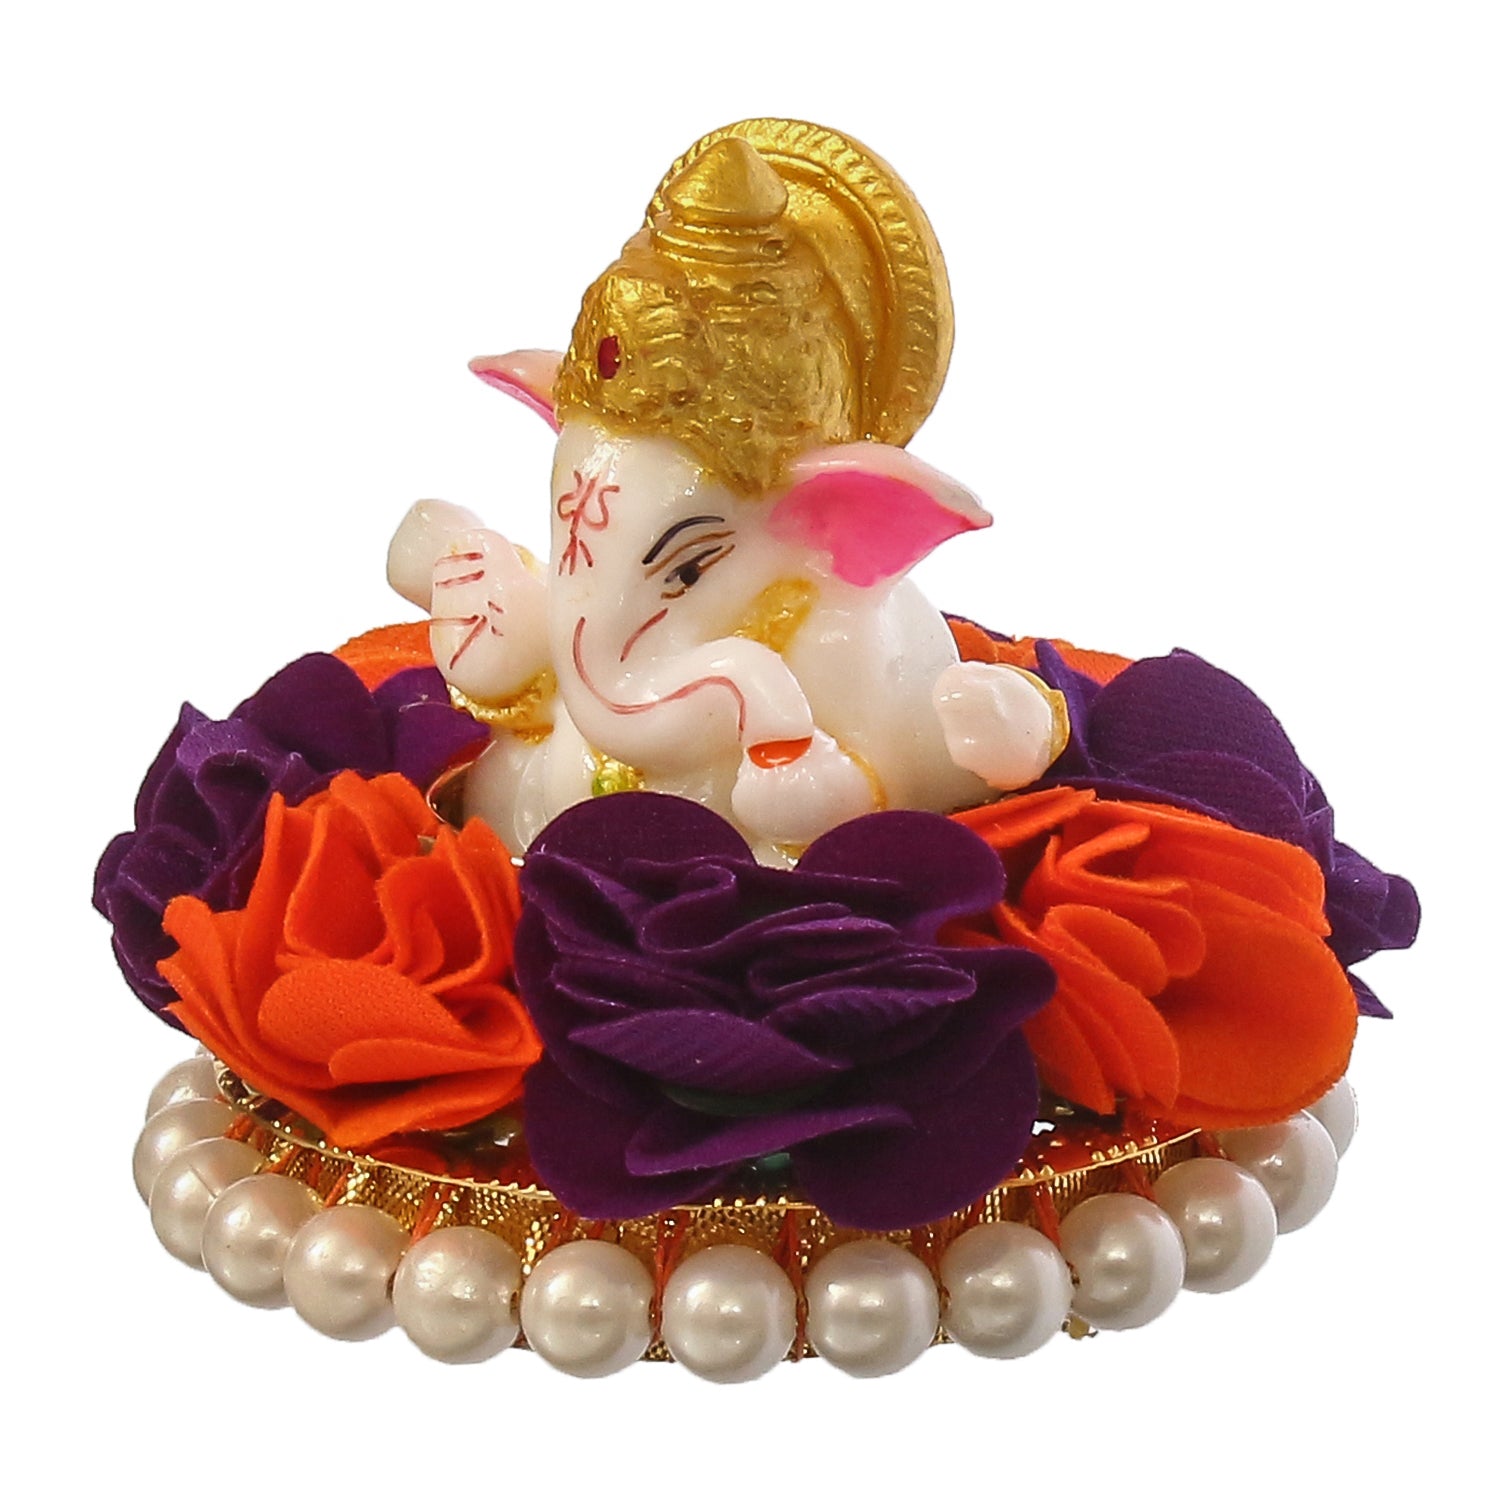 Lord Ganesha Idol On Decorative Handcrafted Orange And Purple Flowers Plate 5